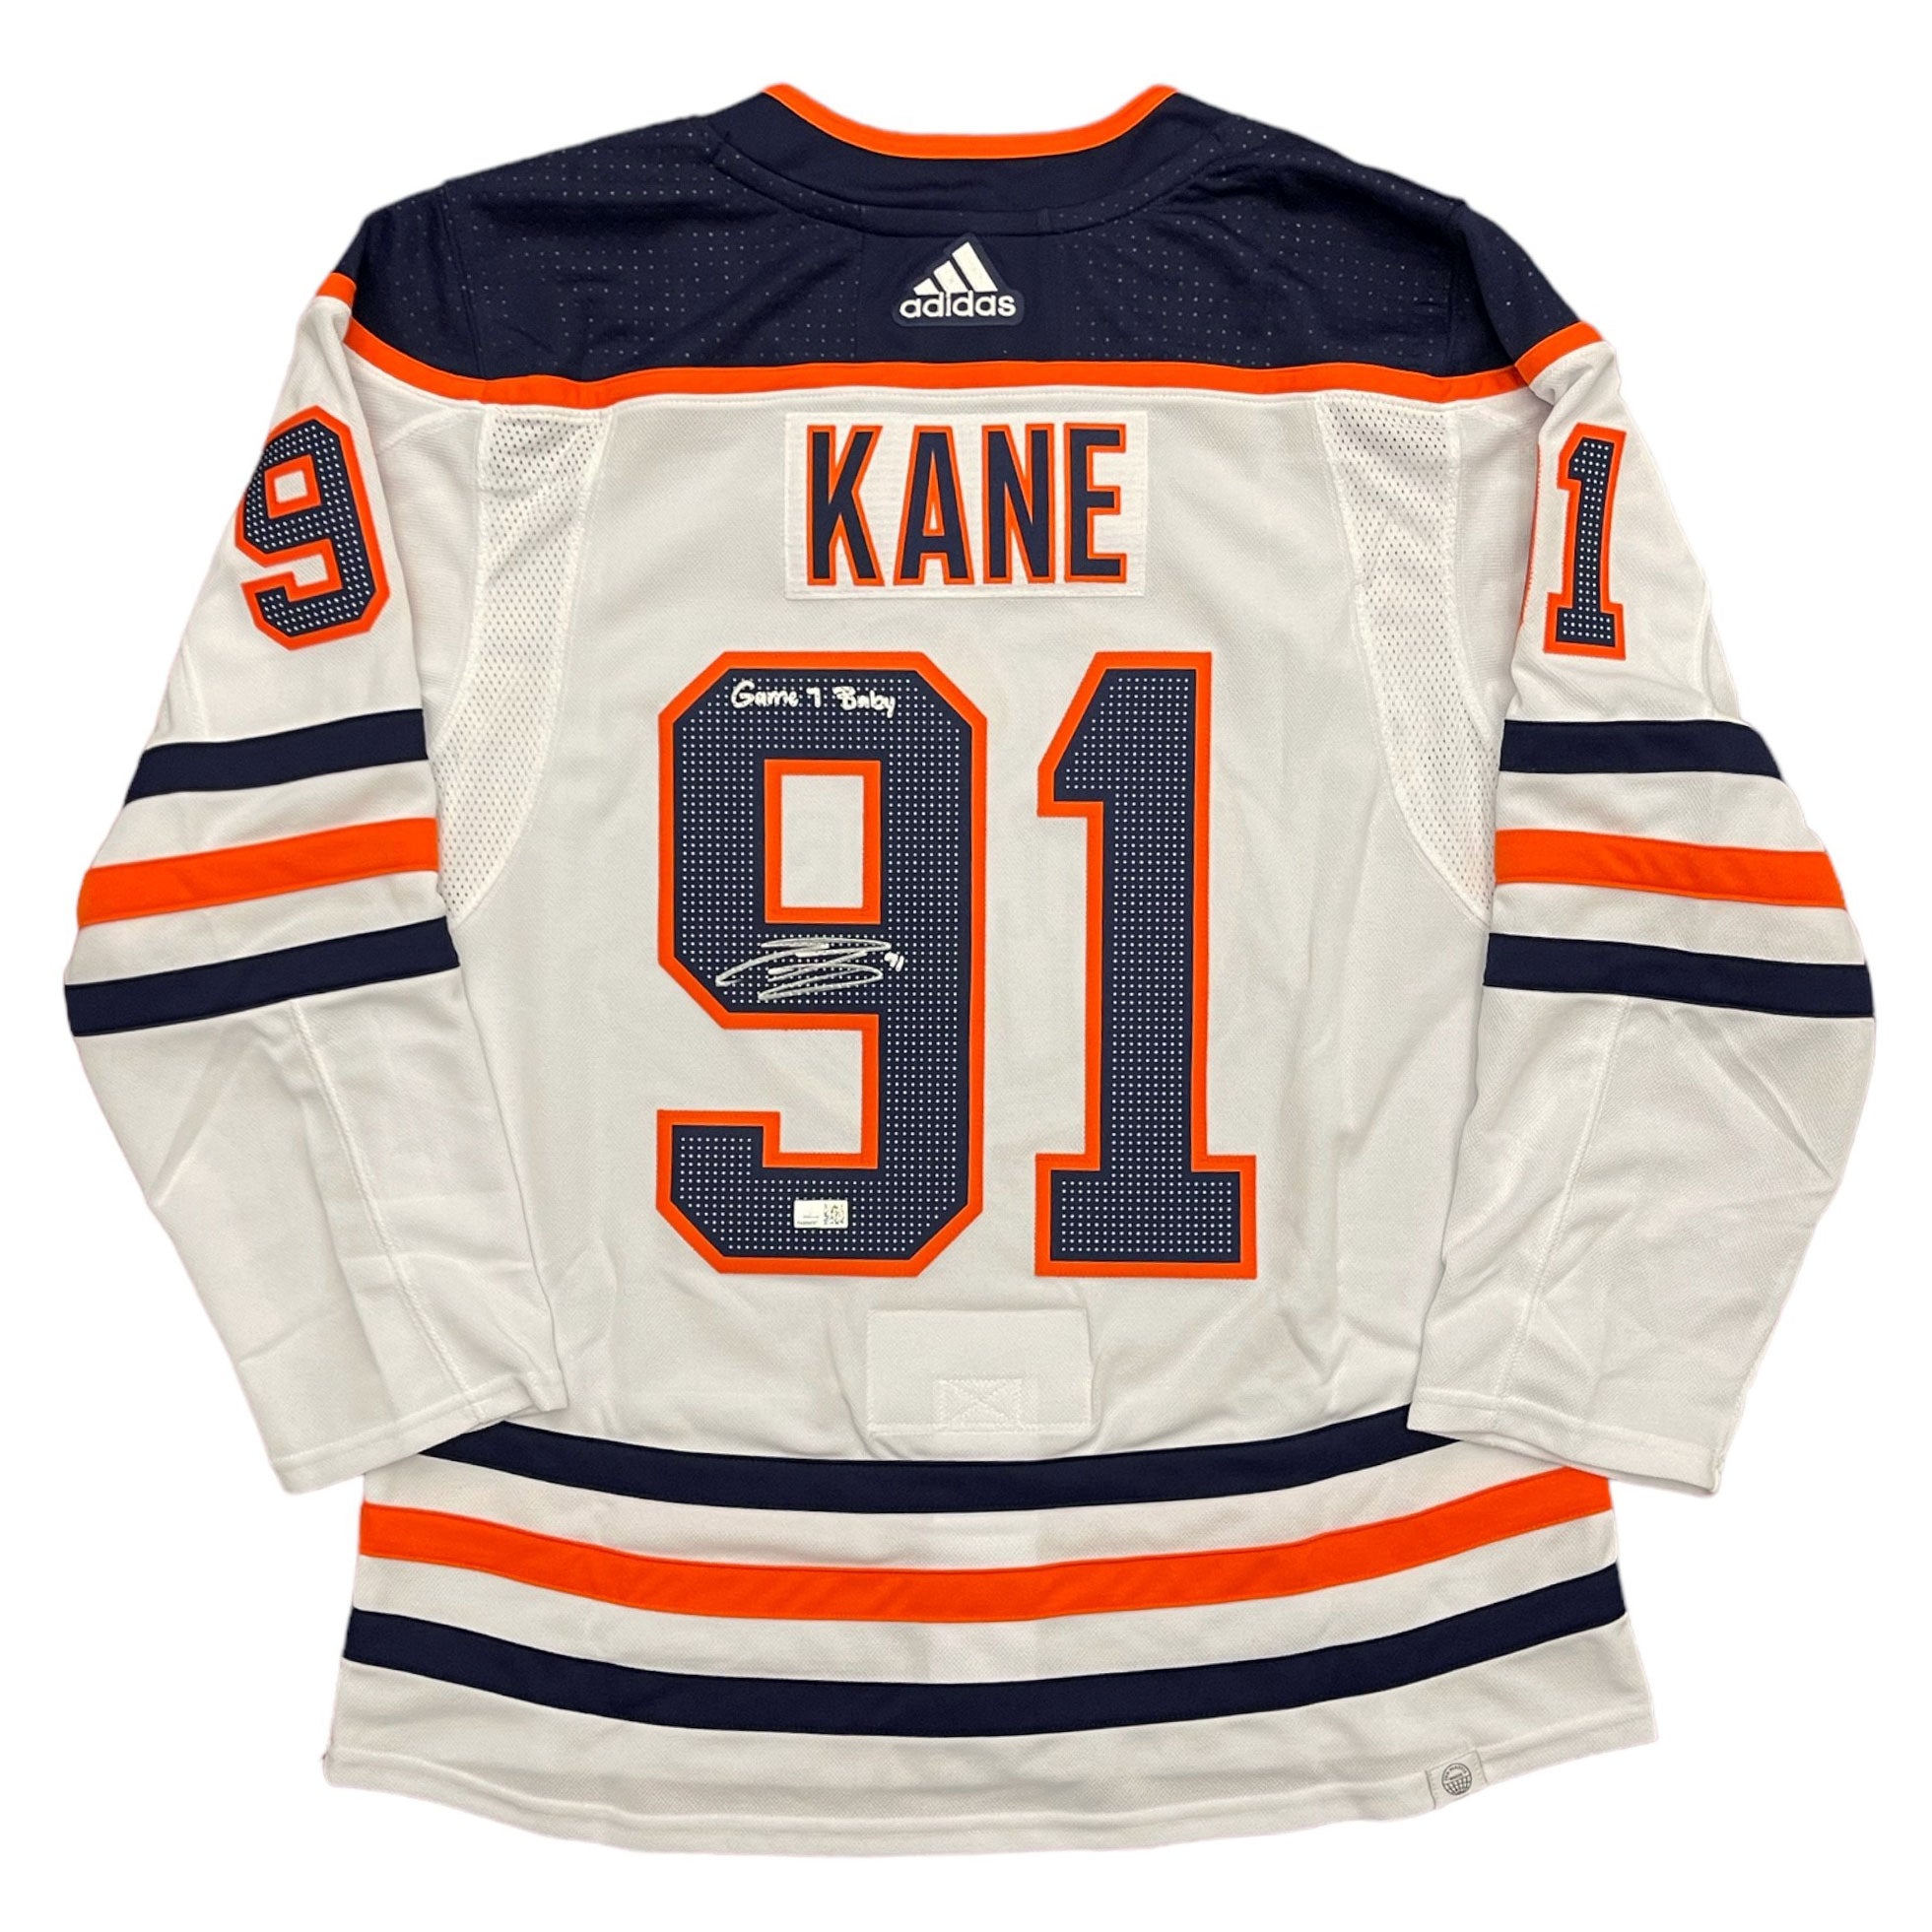 Evander Kane Jersey, Adidas Evander Kane Oilers Jerseys, Gear